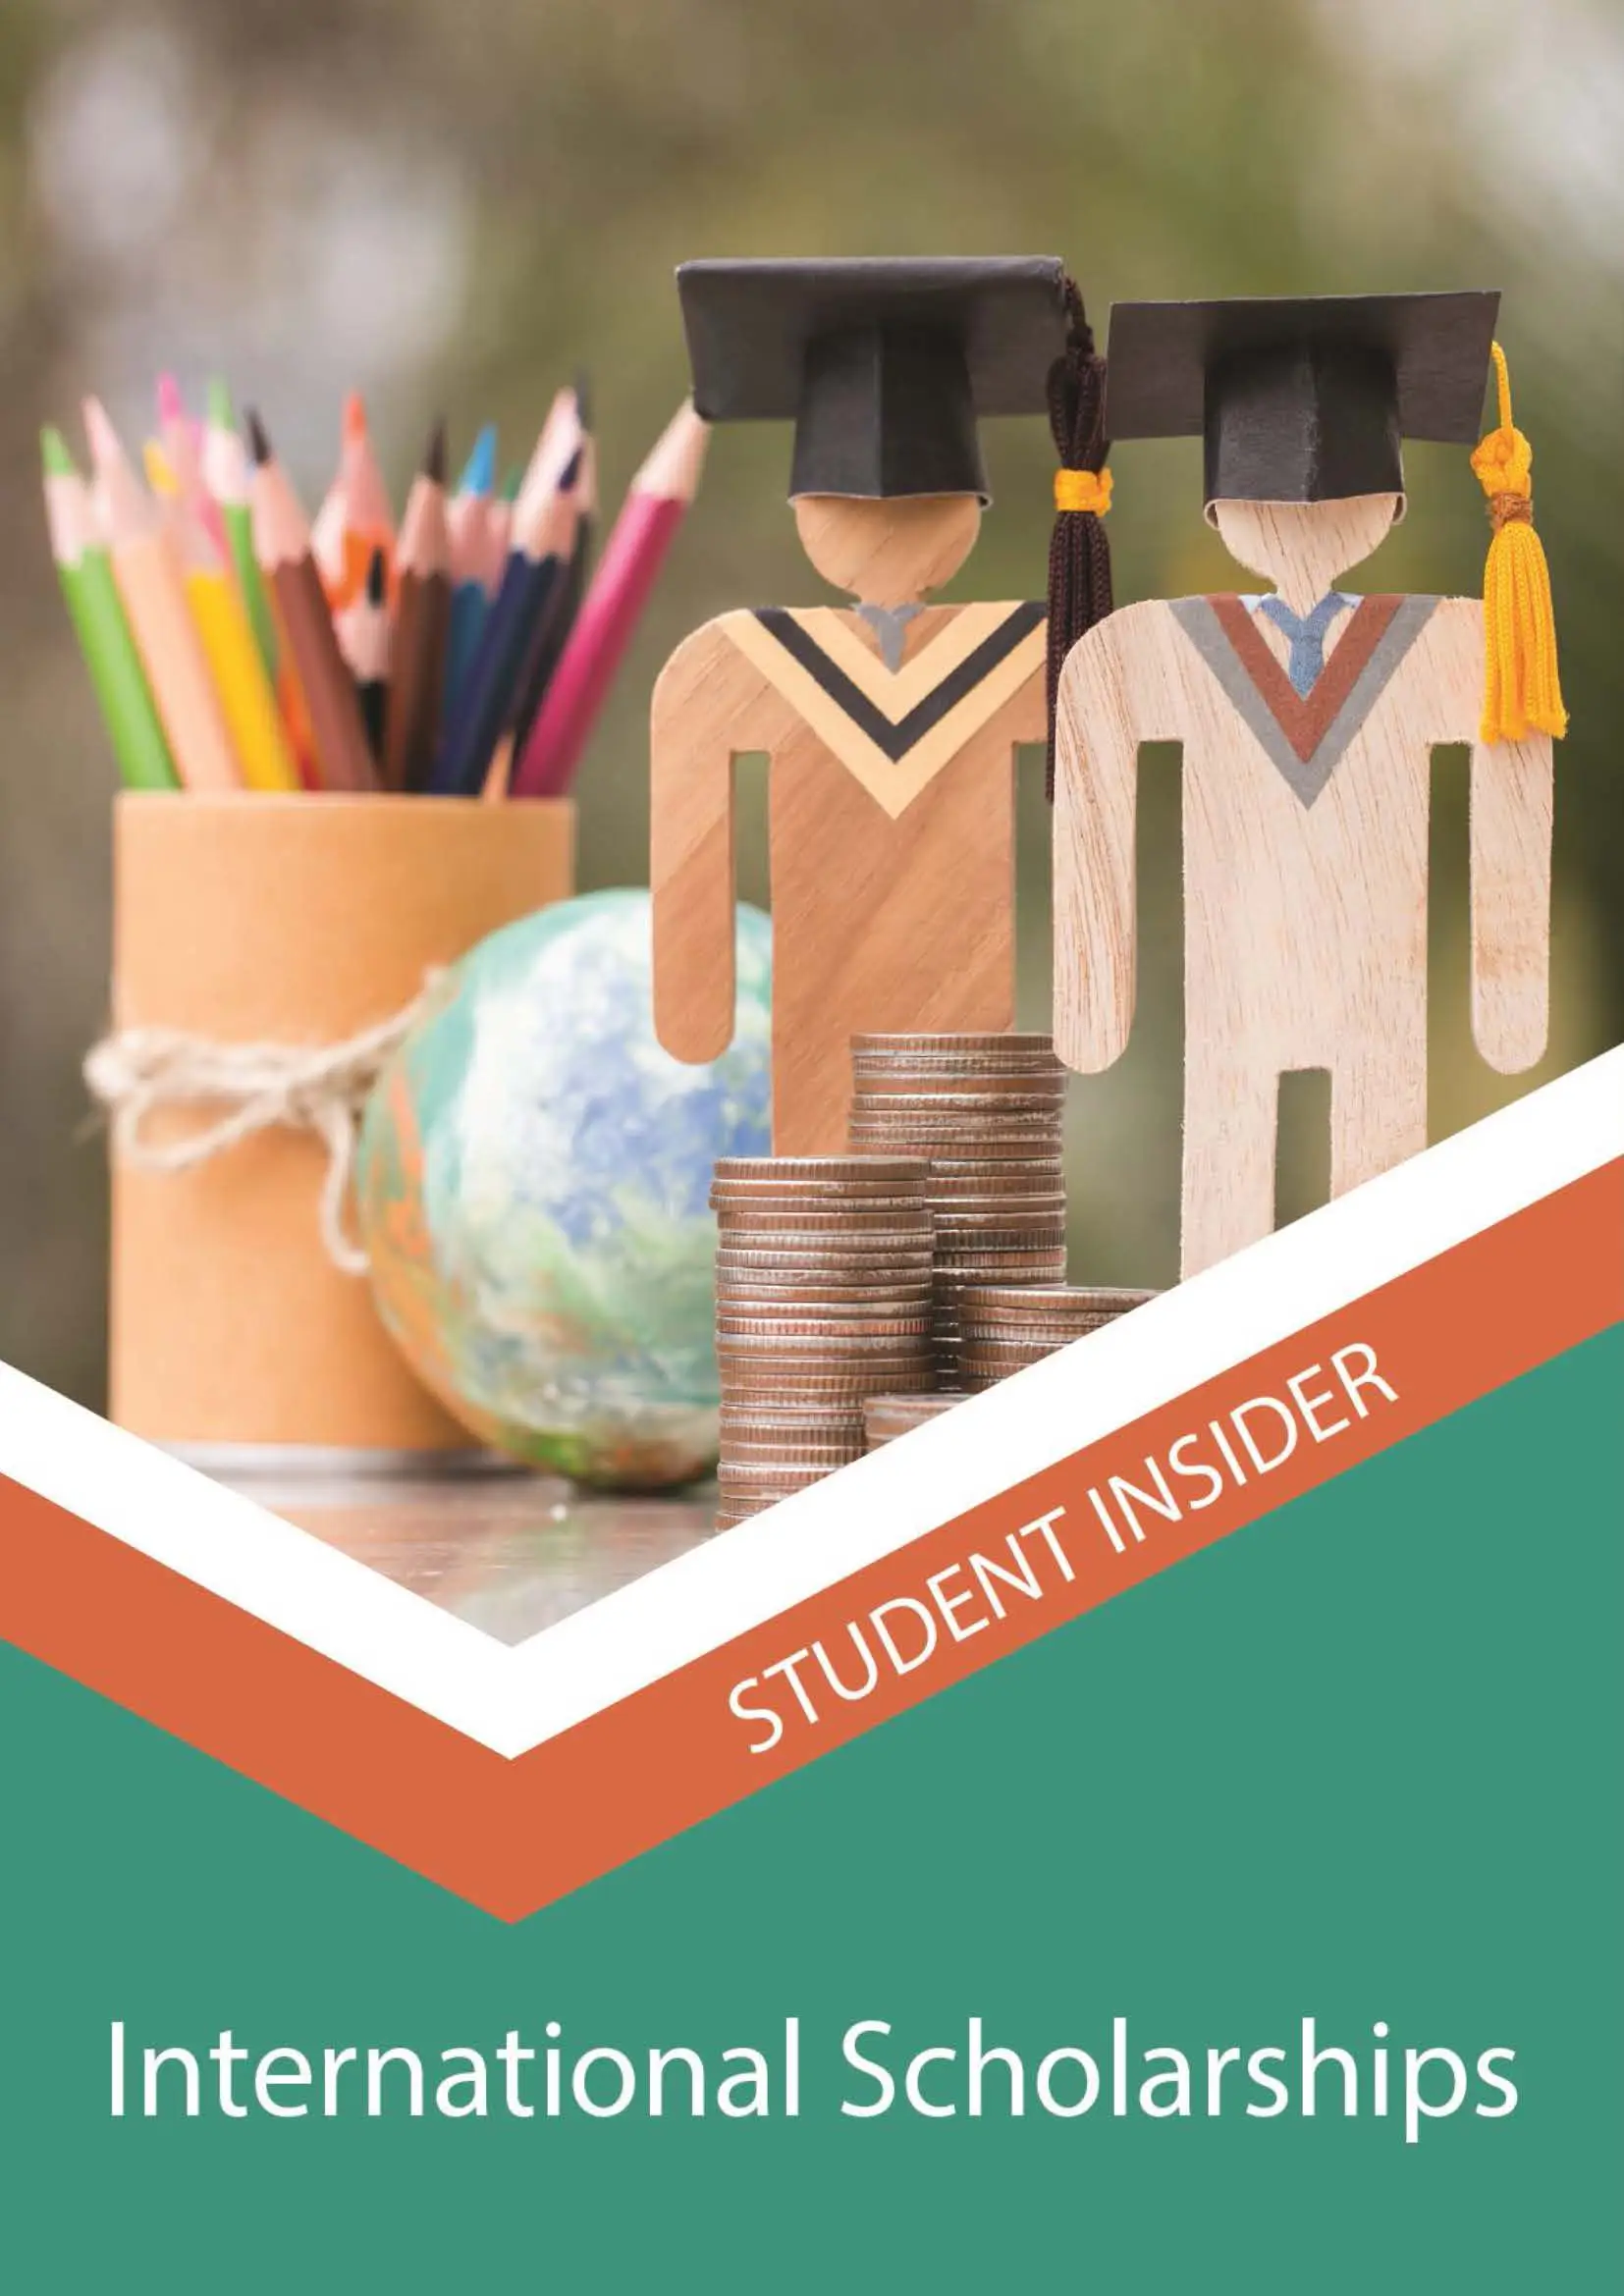 Student Insider Guide International Scholarships